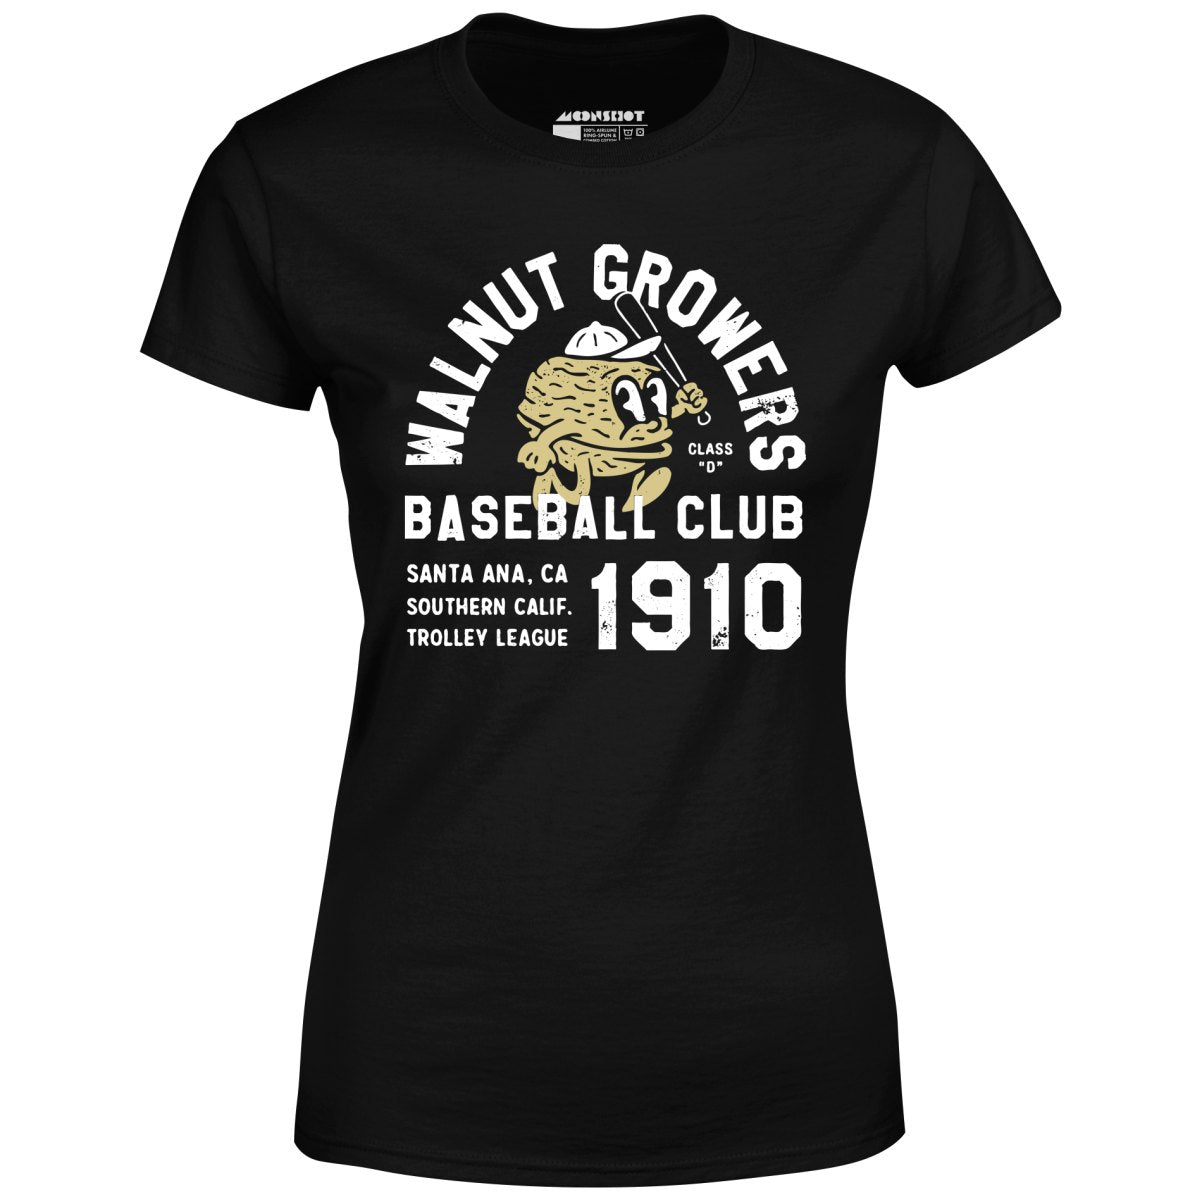 Santa Ana Walnut Growers - California - Vintage Defunct Baseball Teams - Women's T-Shirt